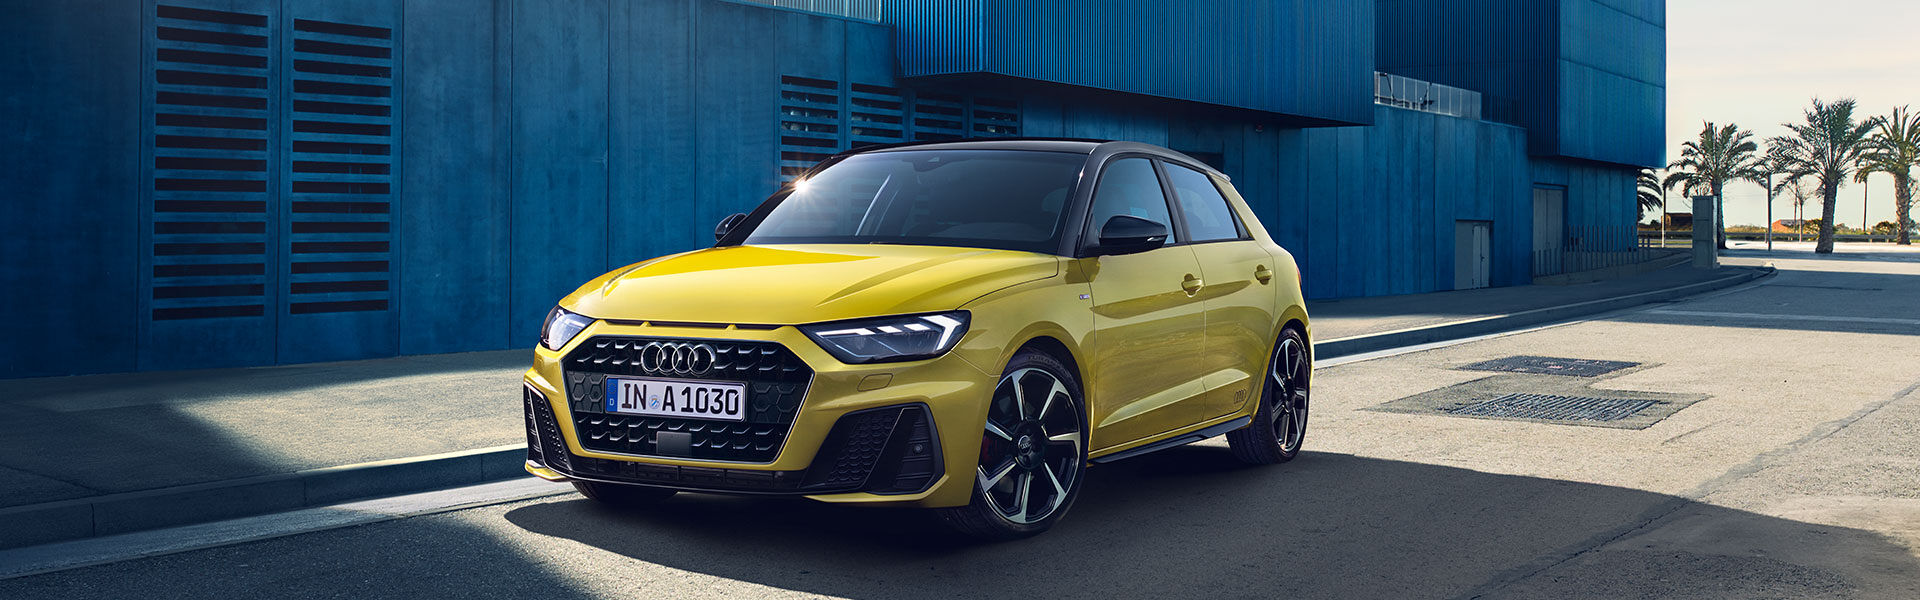 201909-Audi-A1-editions-06.jpg